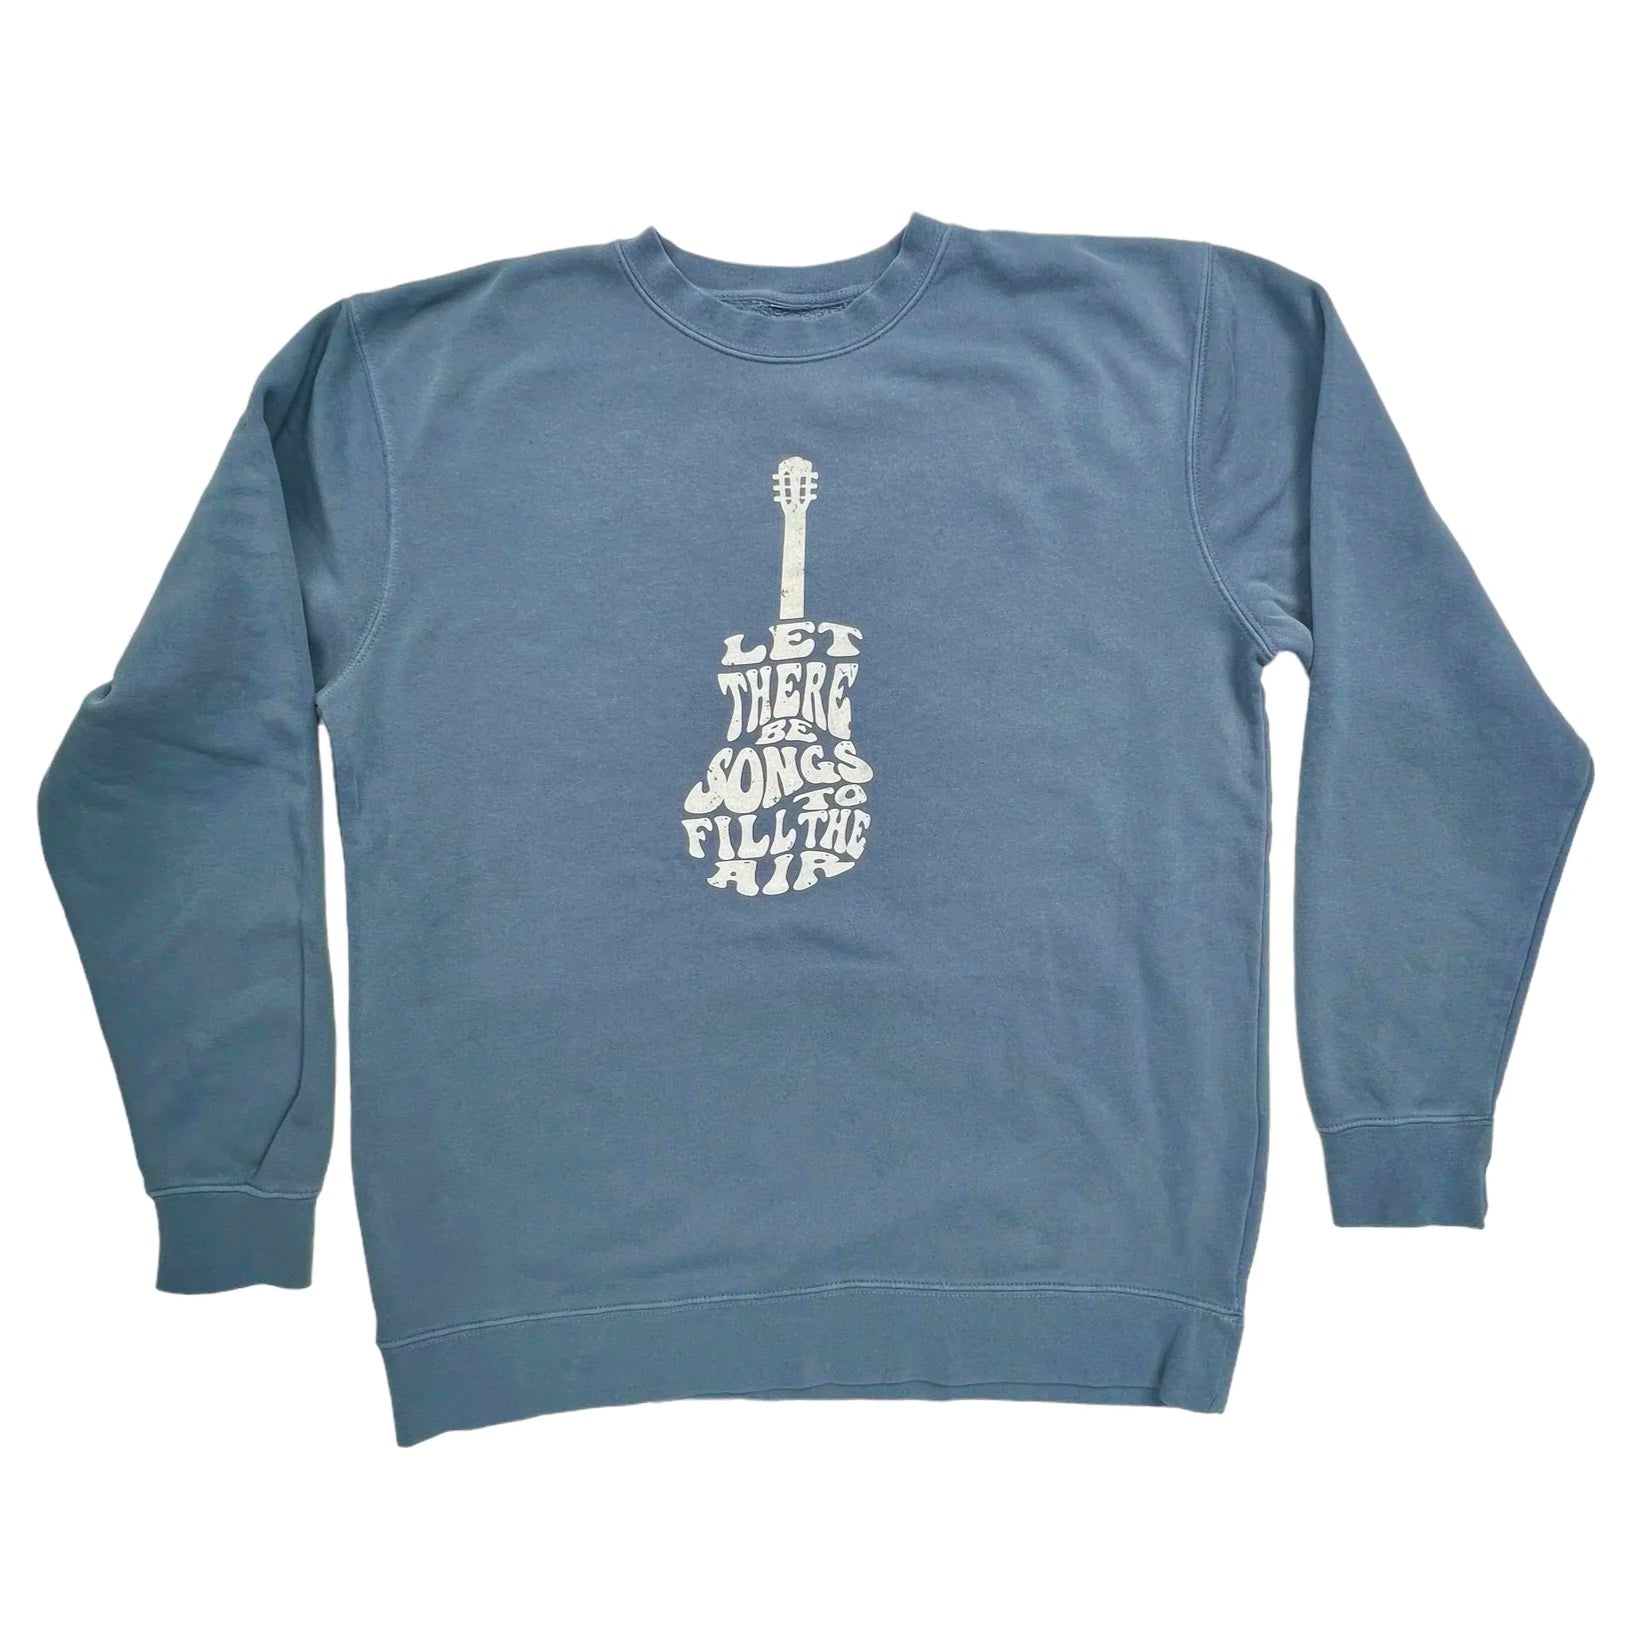 Grateful Dead Lyrics Sweatshirt Blue Ripple - Section 119